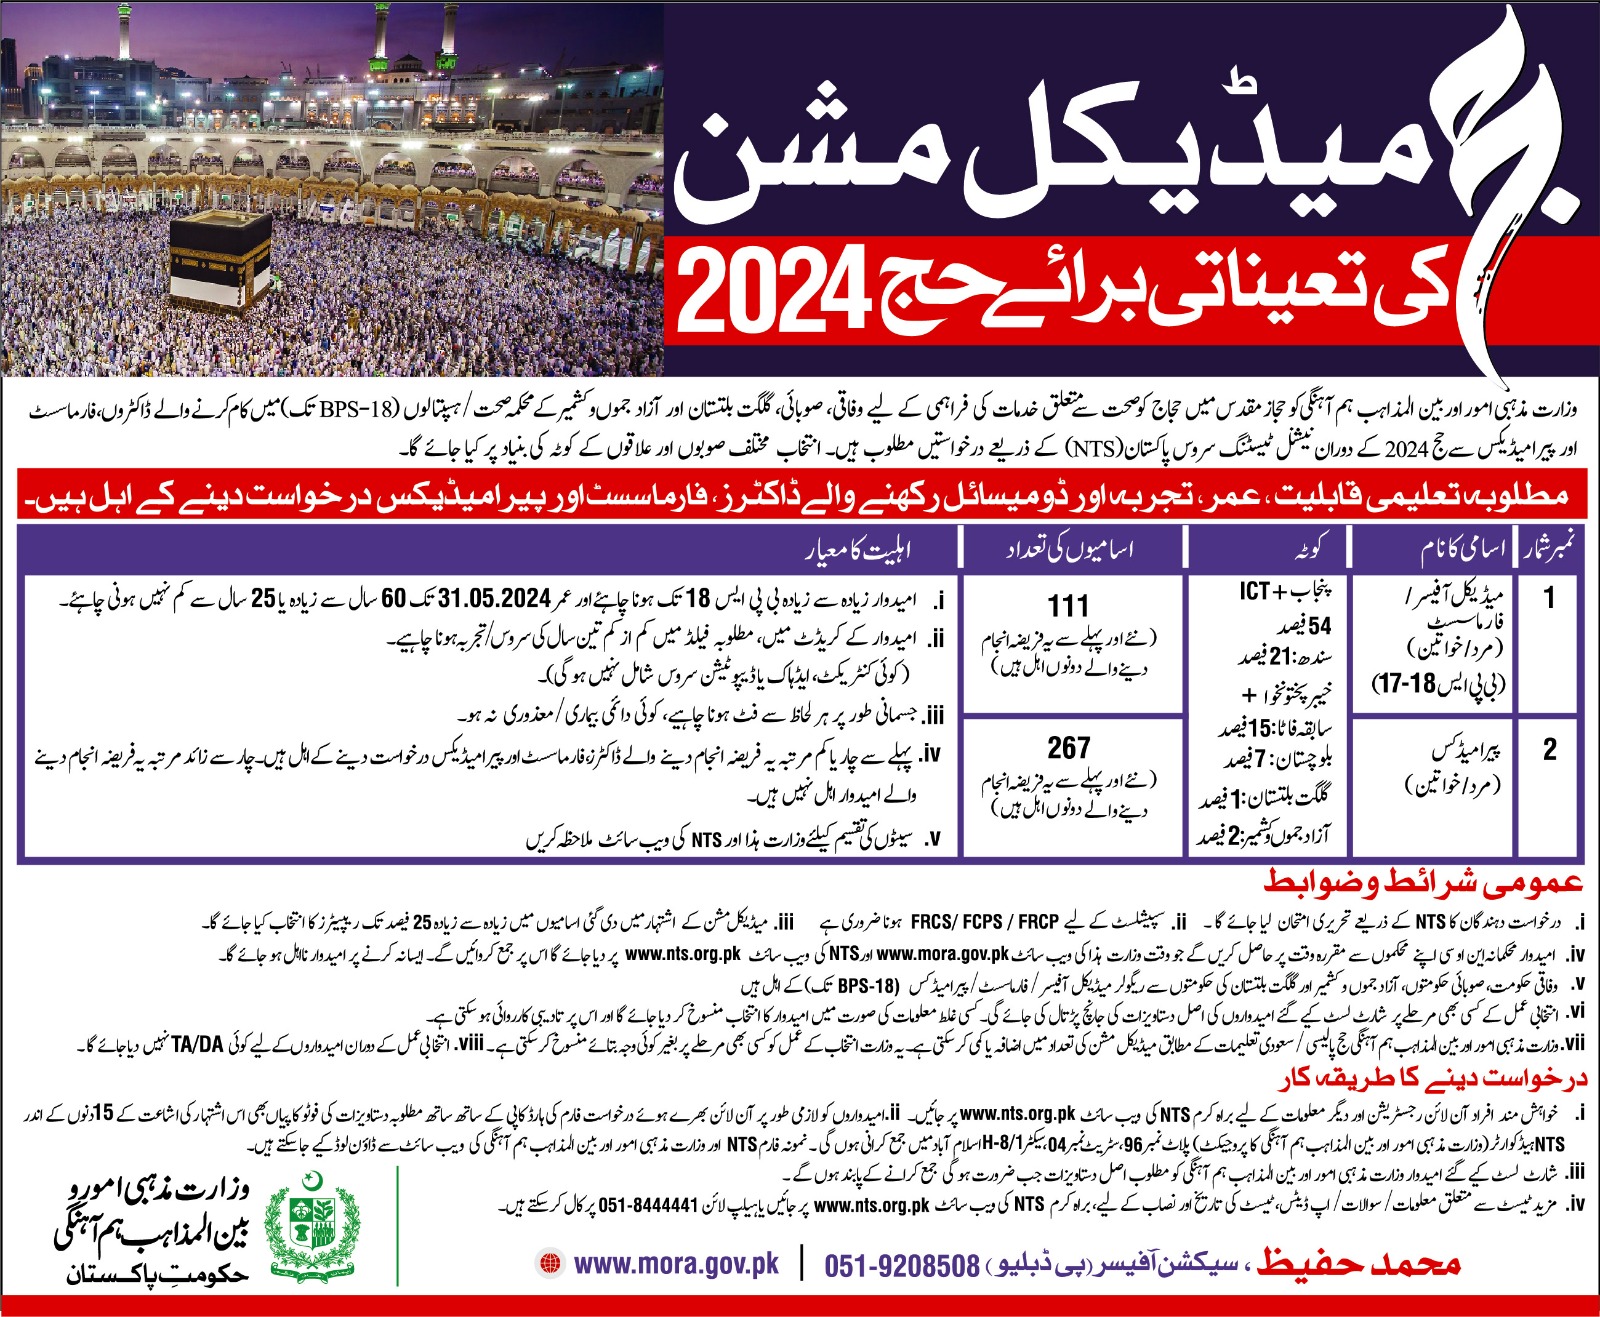 Moavineen-e-Hujjaj for Hajj Operation 2024 Medical